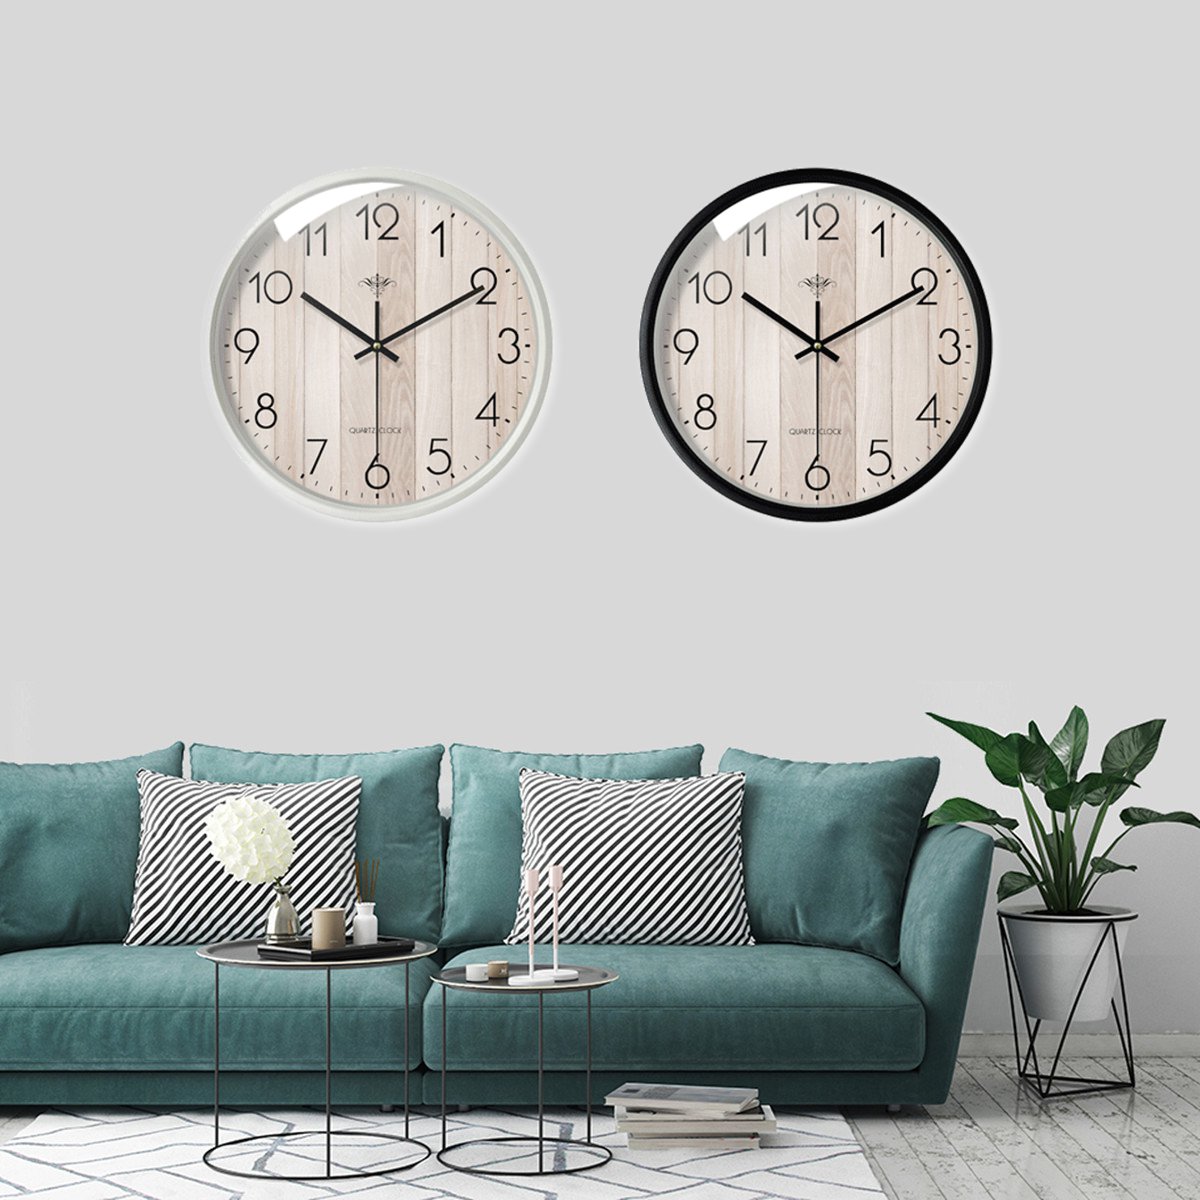 

30CM Round Wooden Wall Clock Modern Home Living Room Kitchen Hanging Watch Decor